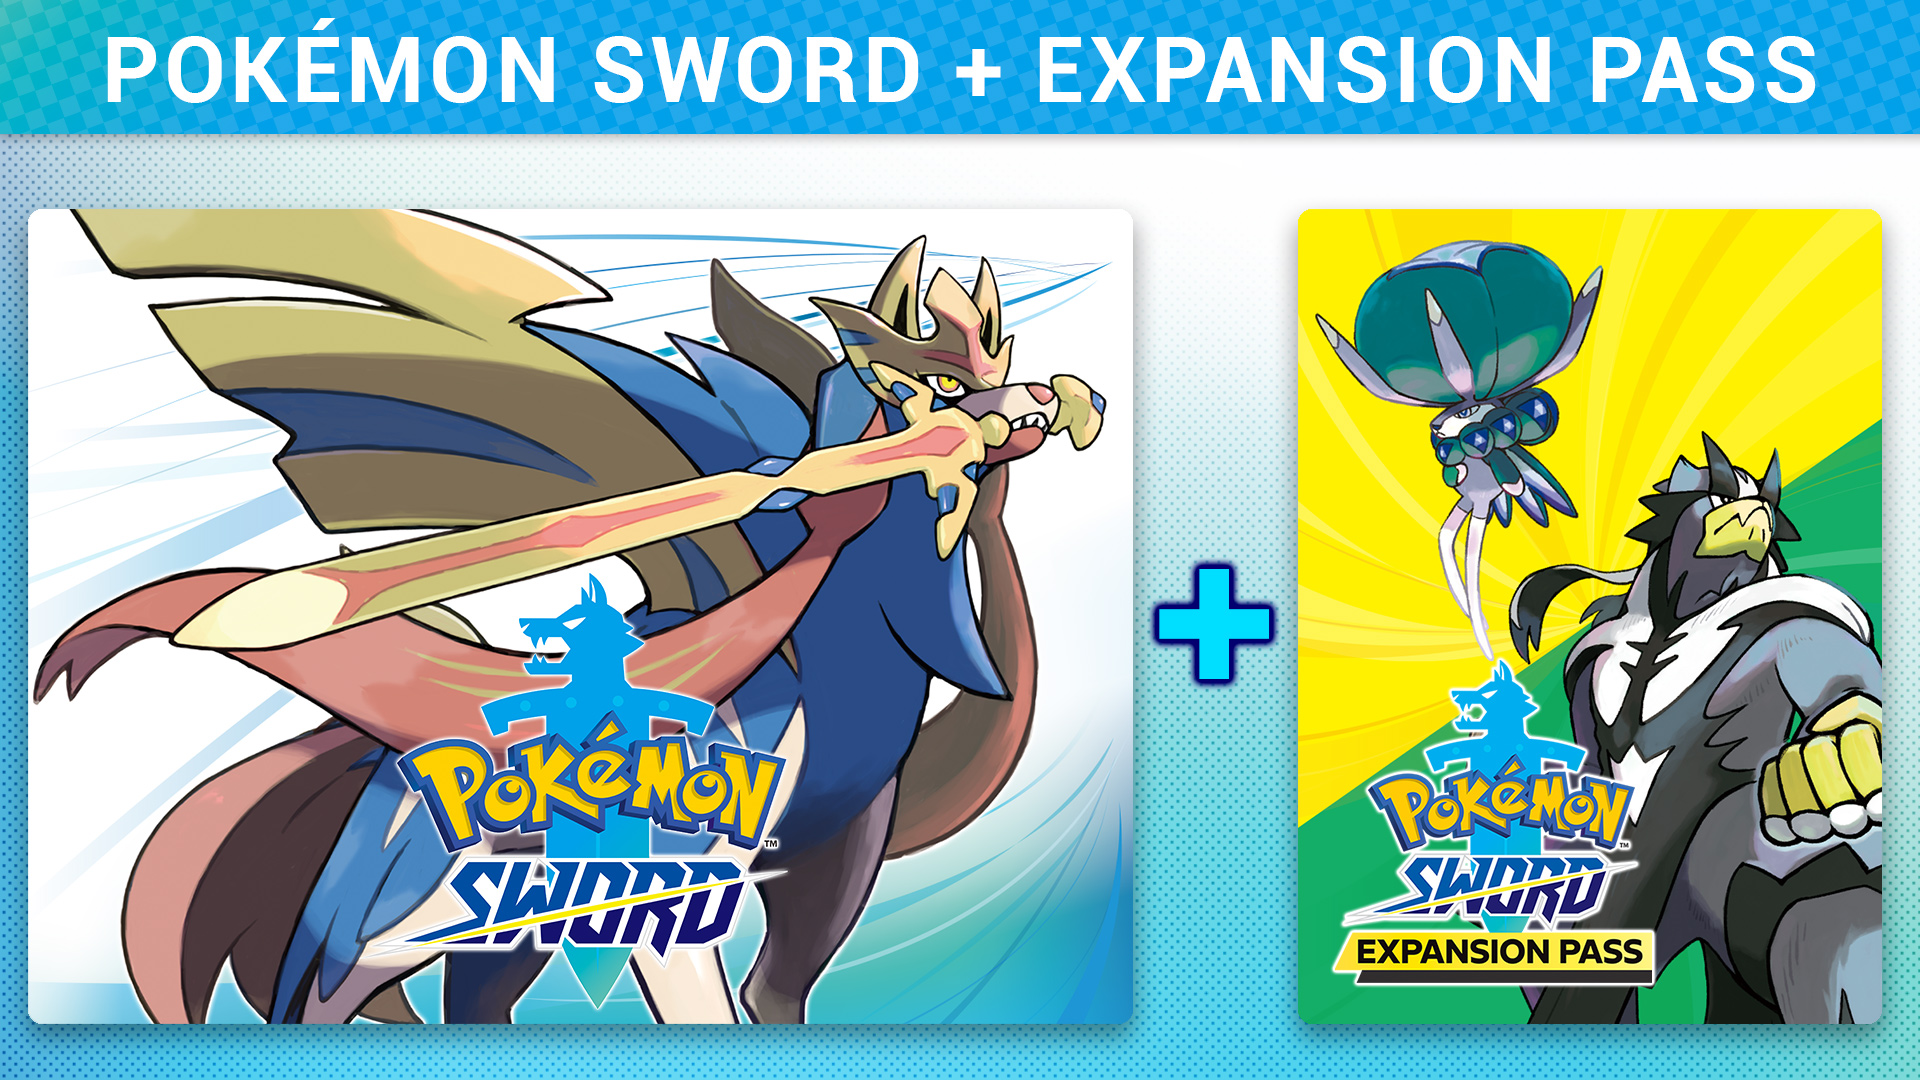 Pokémon Sword + Expansion Pass 